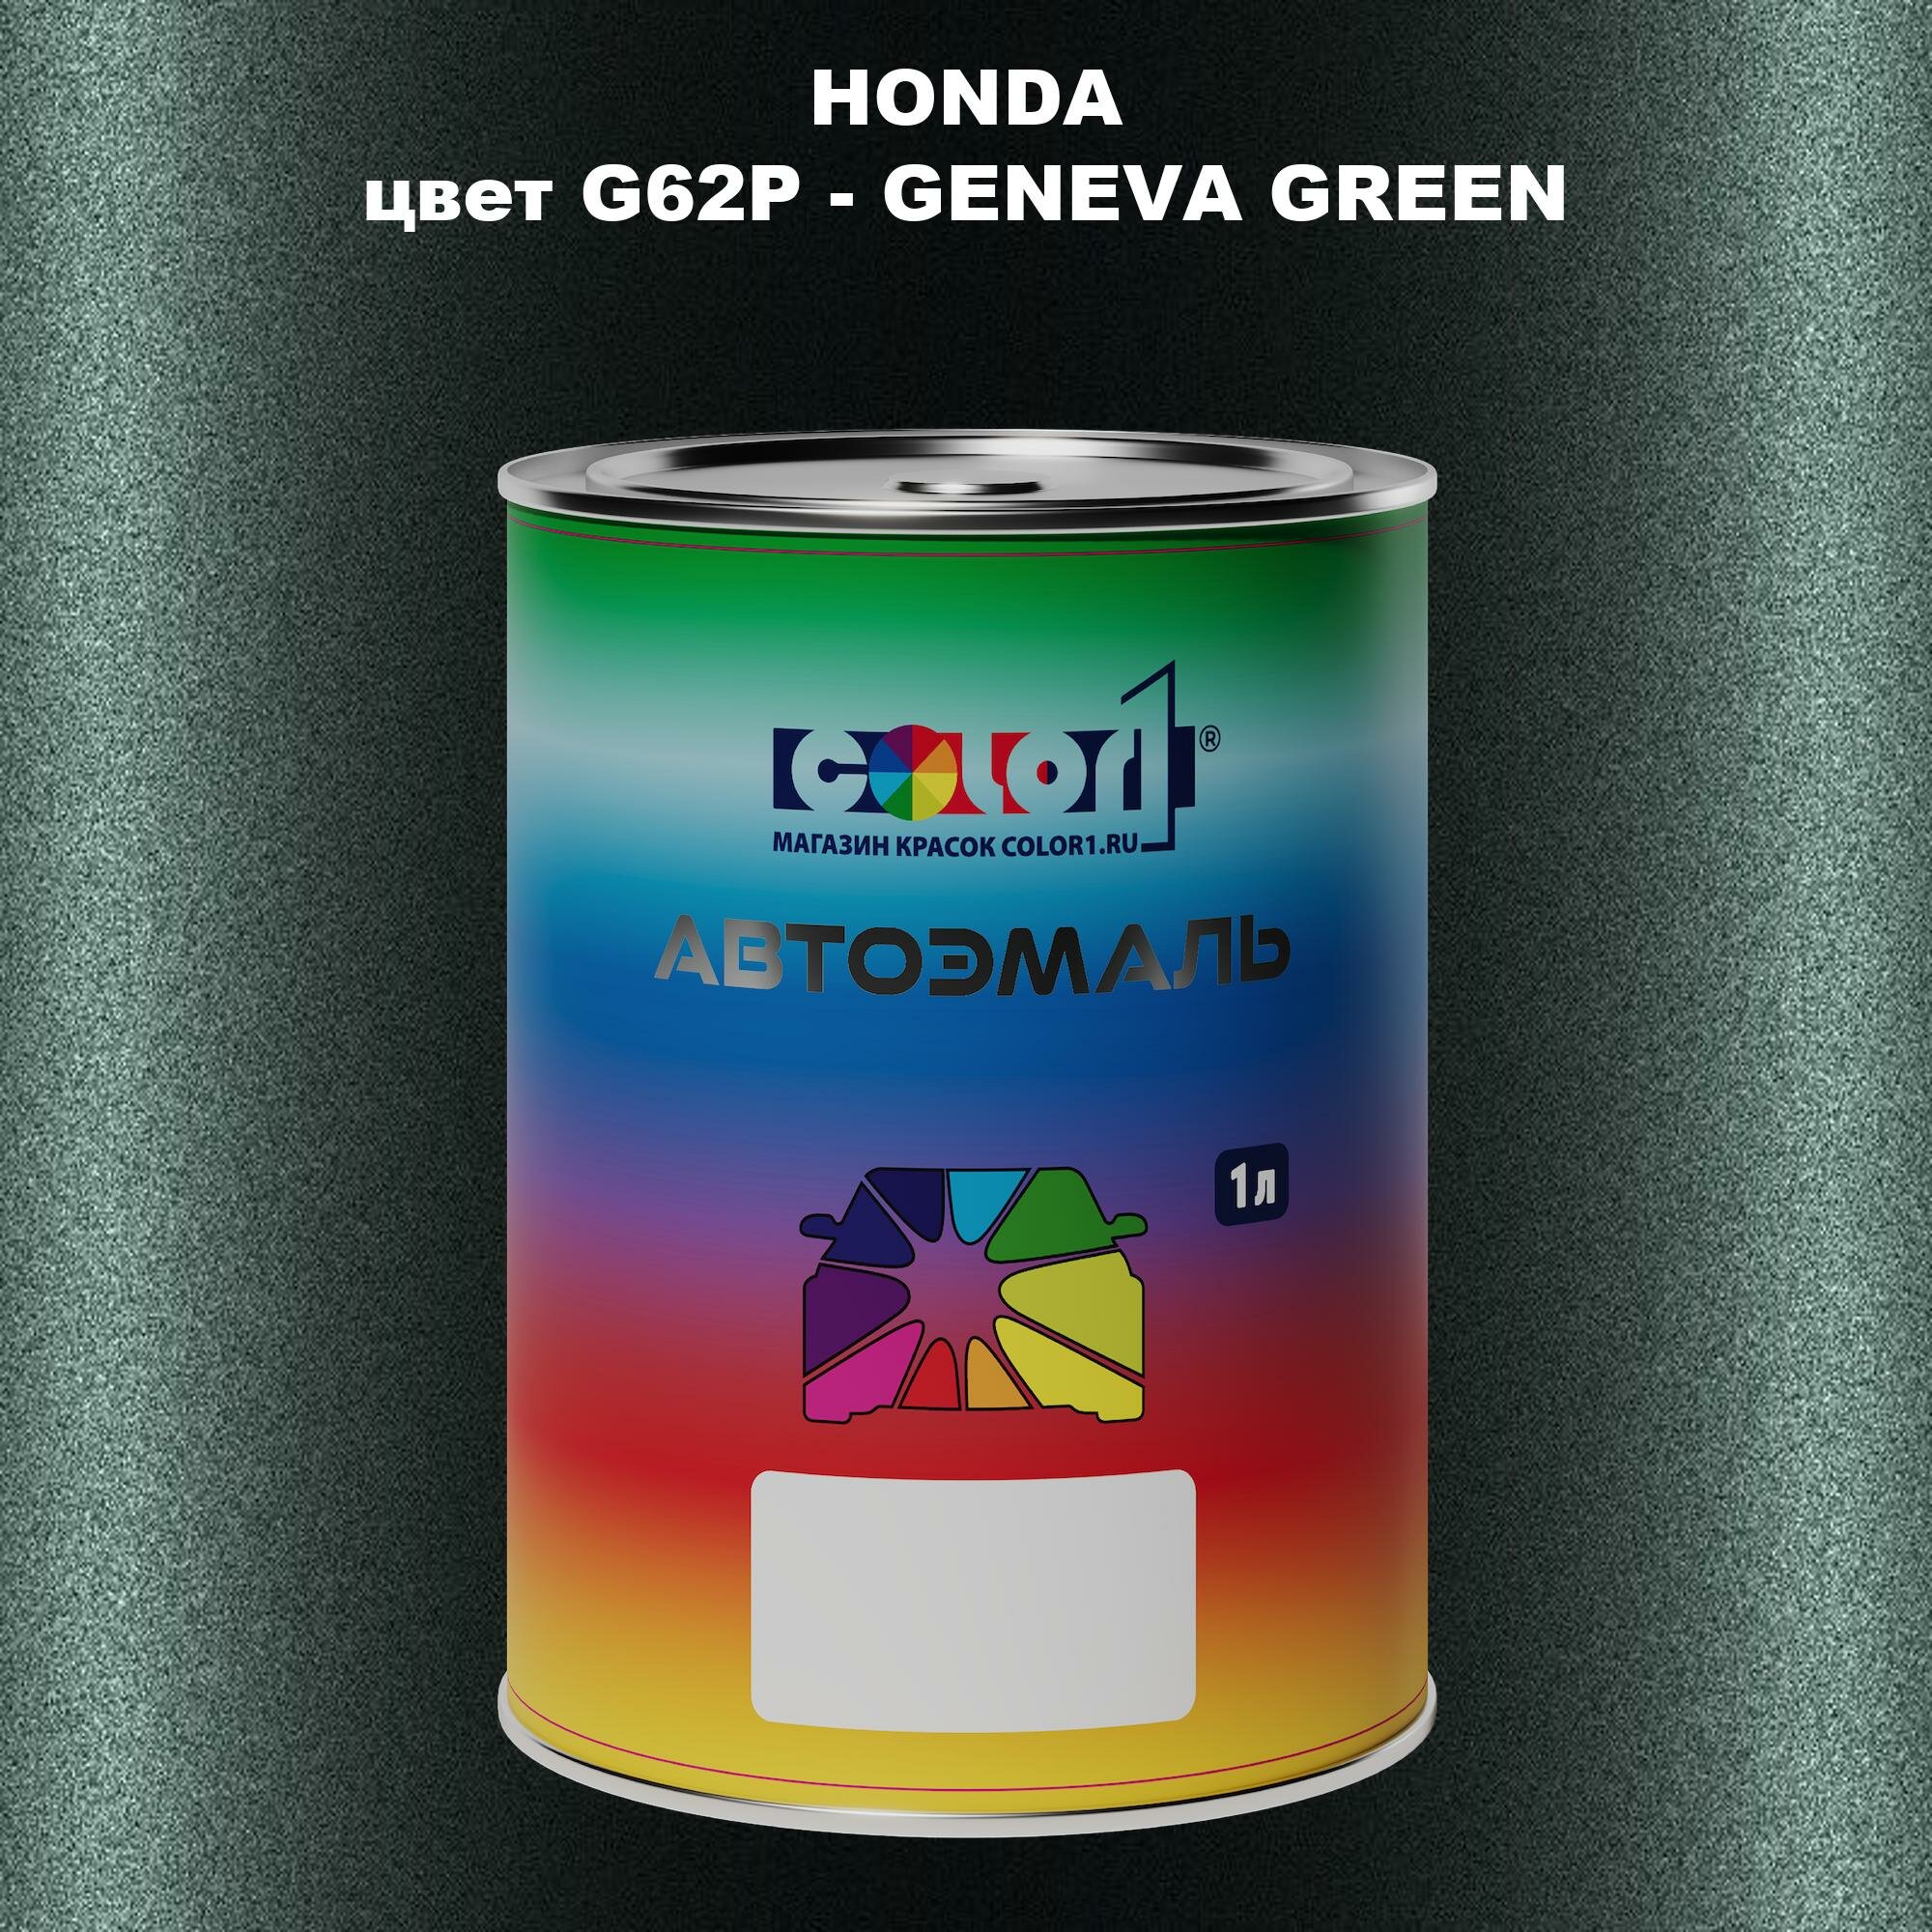 Автомобильная краска COLOR1 для HONDA, цвет G62P - GENEVA GREEN